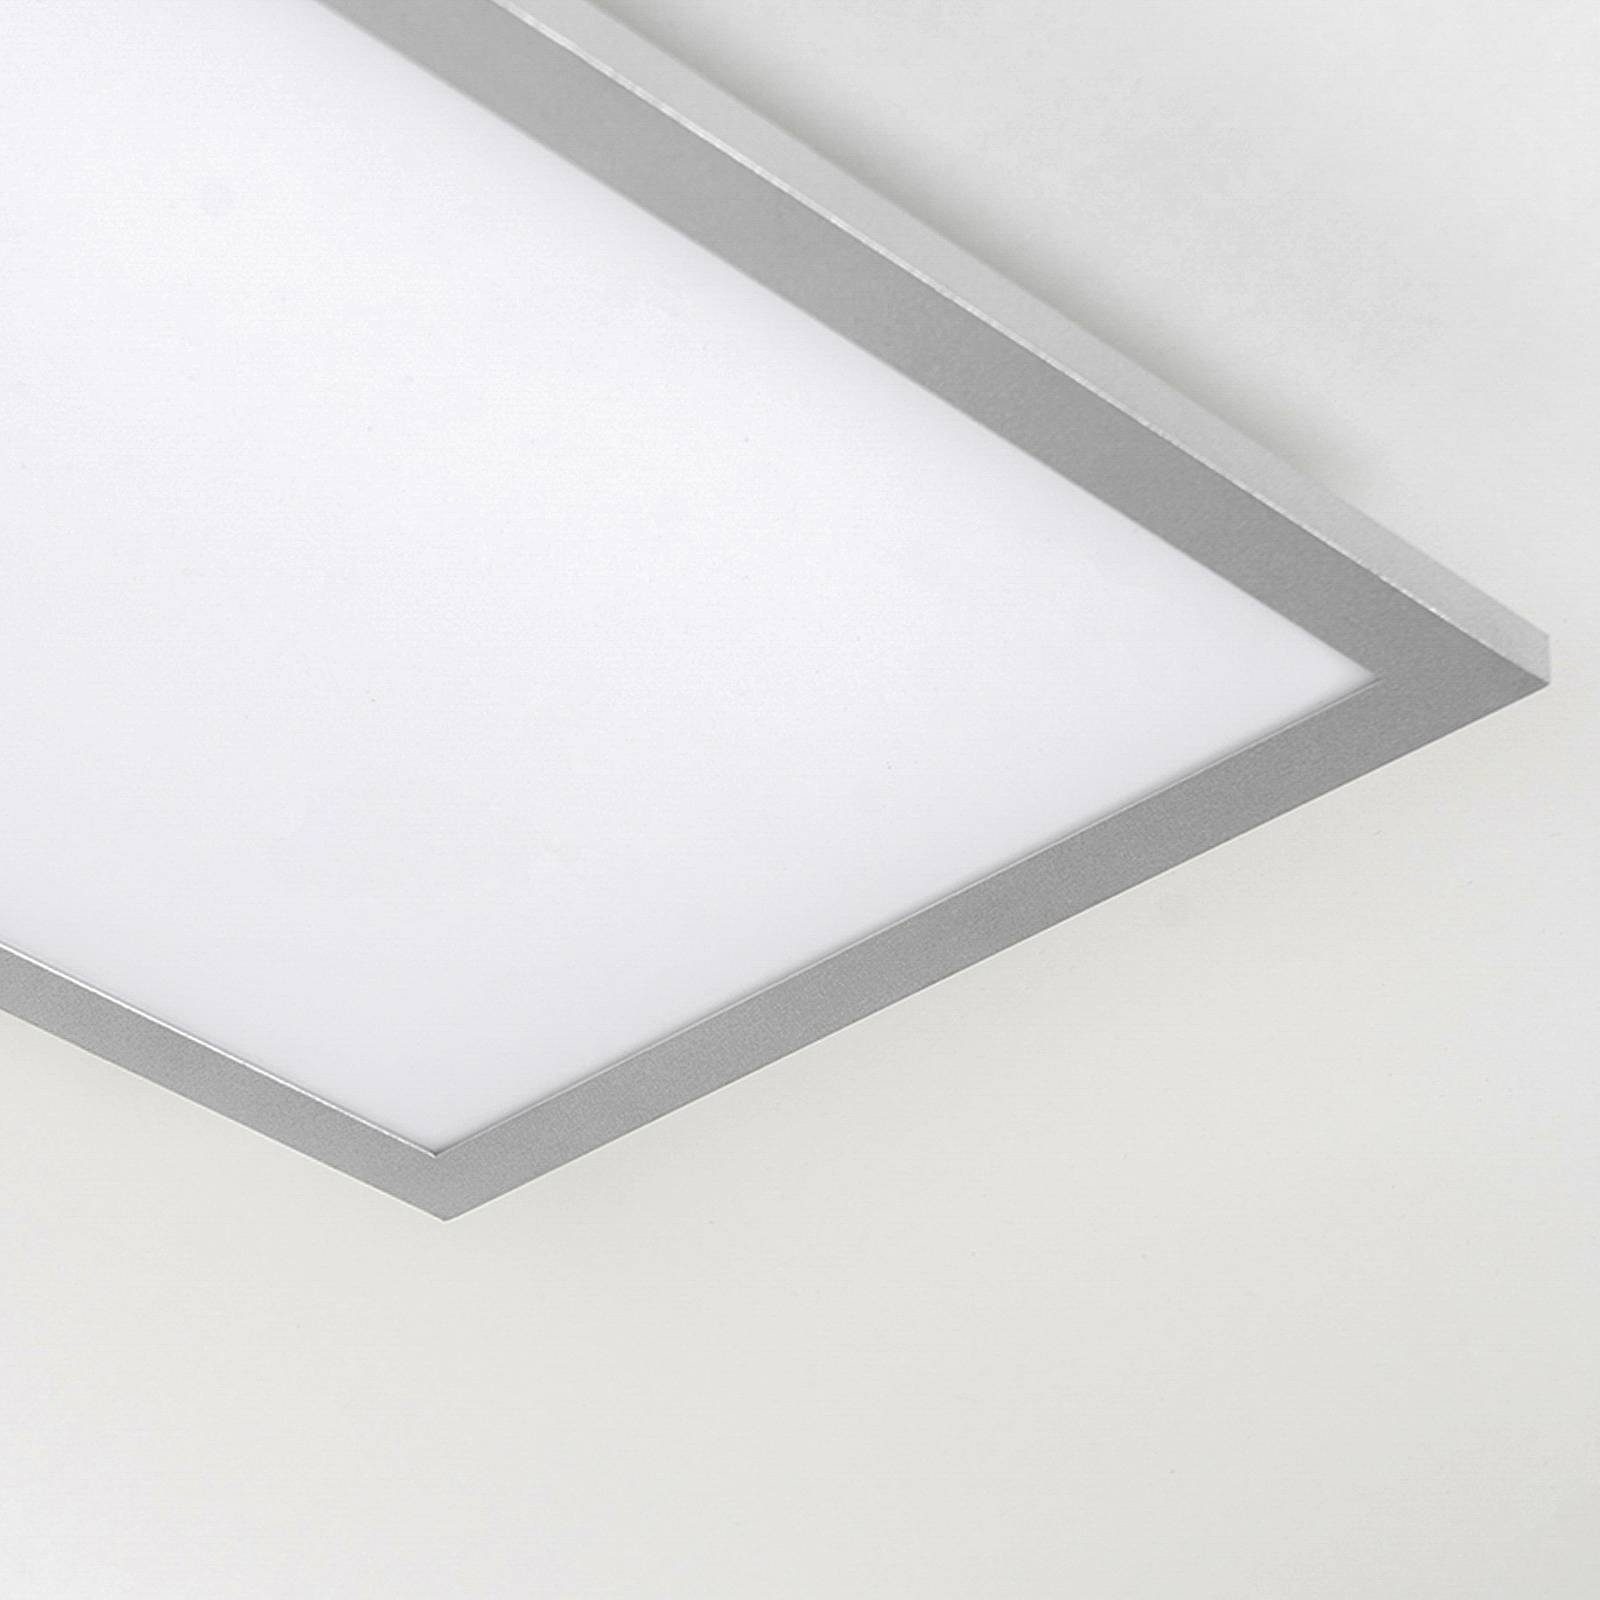 Arcchio LED Panel Lysander, / dimmbar, Aluminium, Kunststoff, silber, fest Metall, 1 warmweiß flammig, LED-Leuchtmittel weiß, verbaut, Farbwechsel inkl. tageslicht